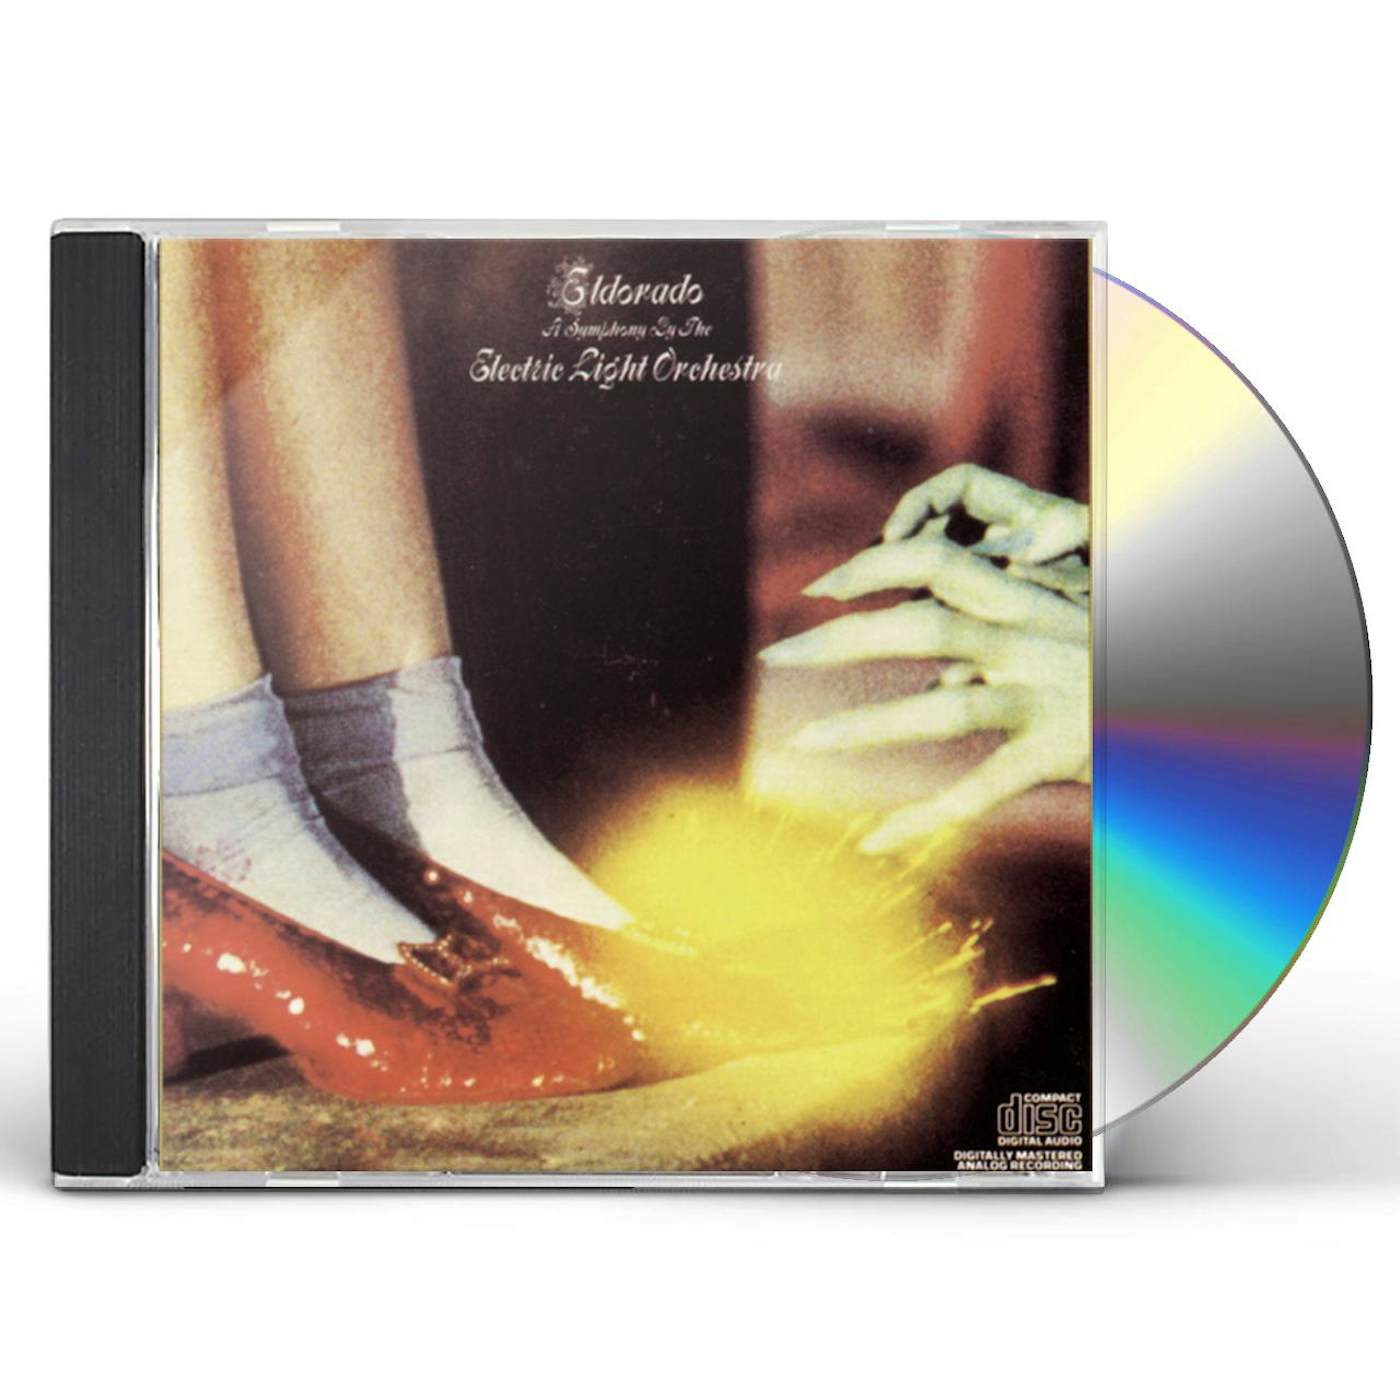 ELO (Electric Light Orchestra) ELDORADO CD